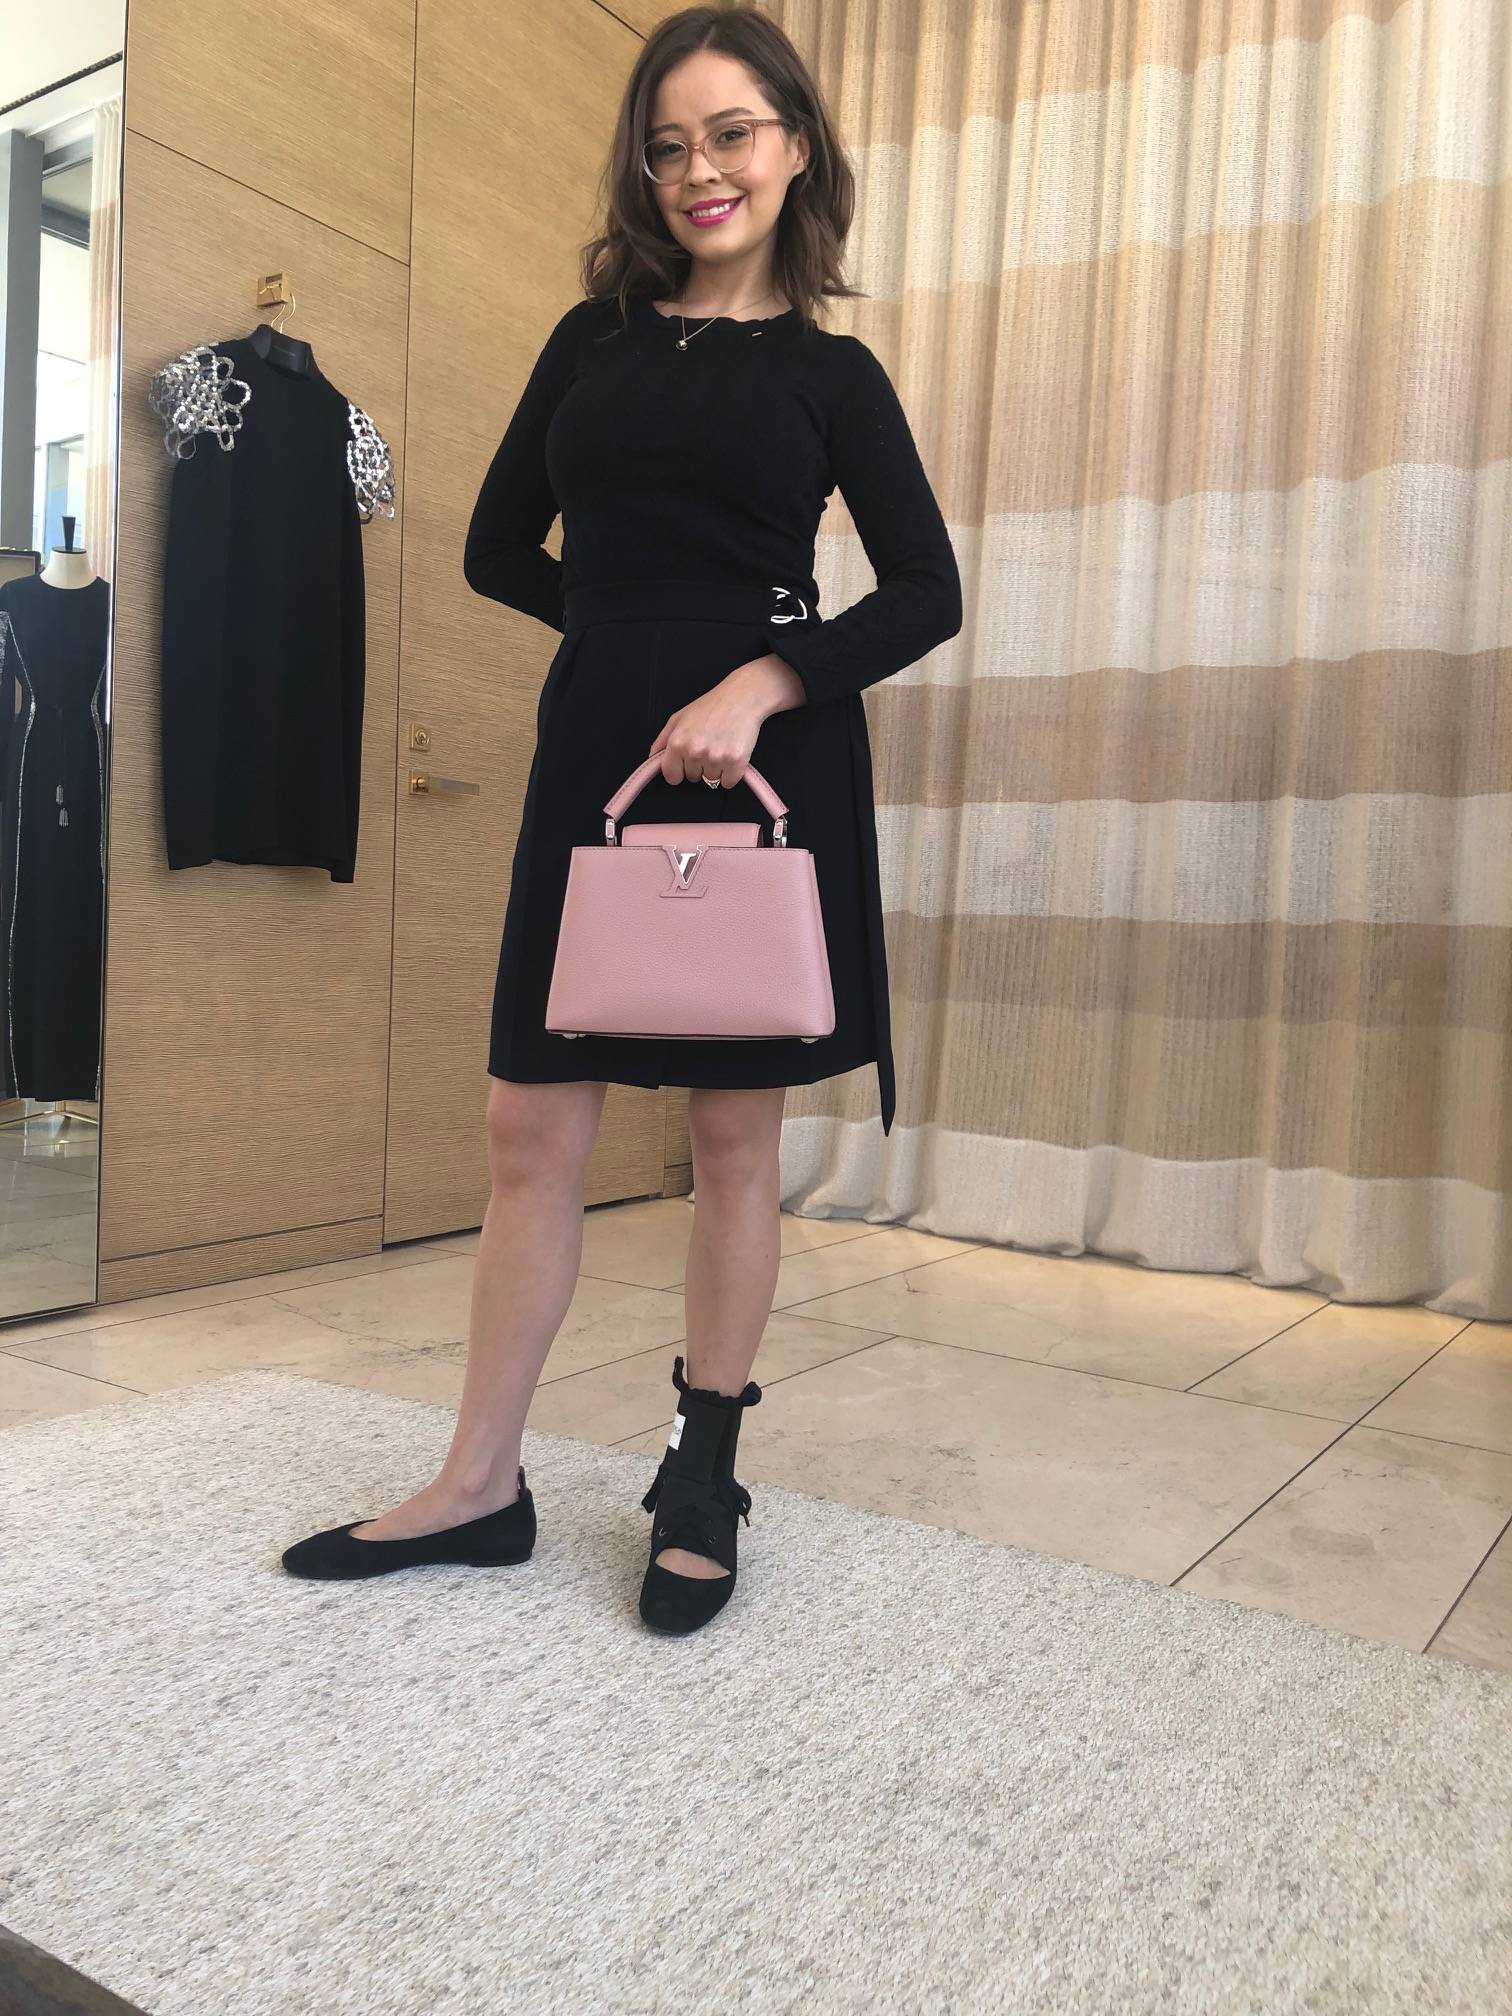 Louis Vuitton Capucines Handbag Storage Size Guide – Luxury